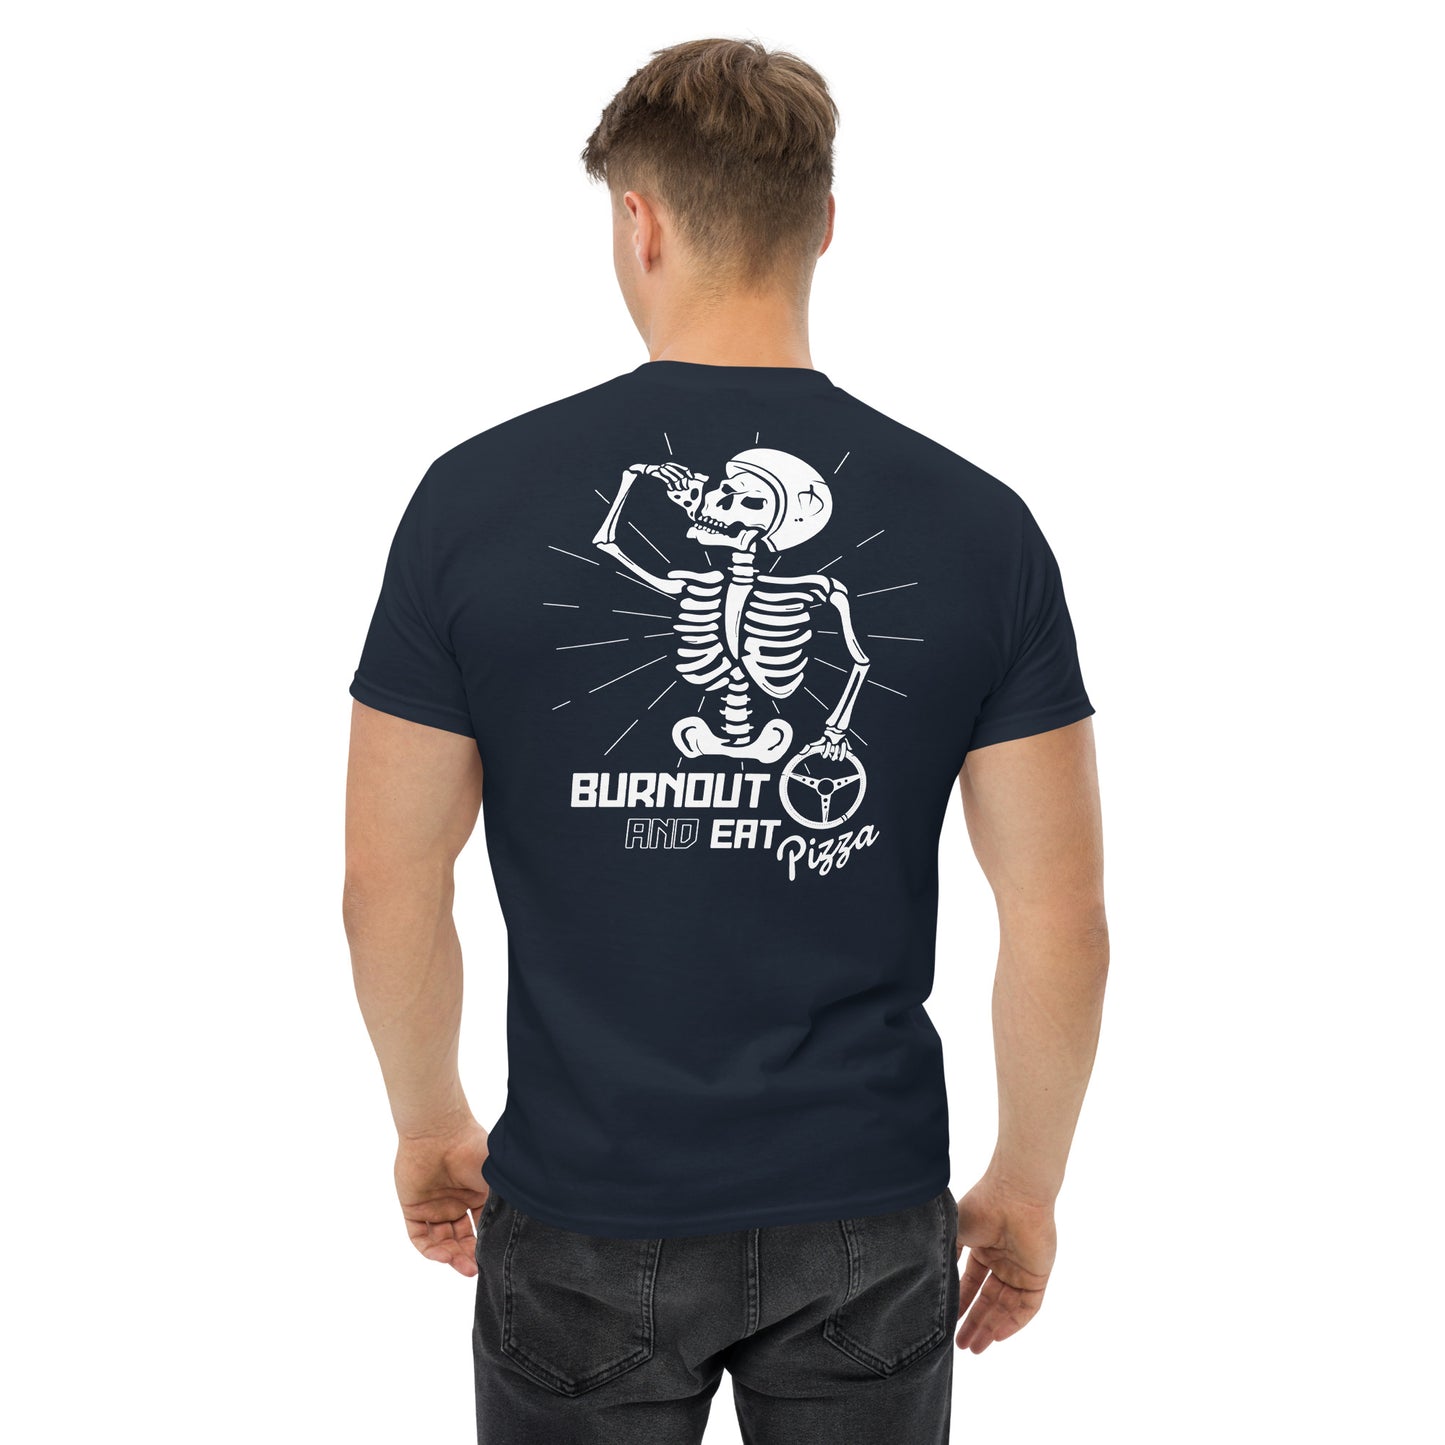 Skull "Burnout and Eat Pizza" Unisex T-Shirt